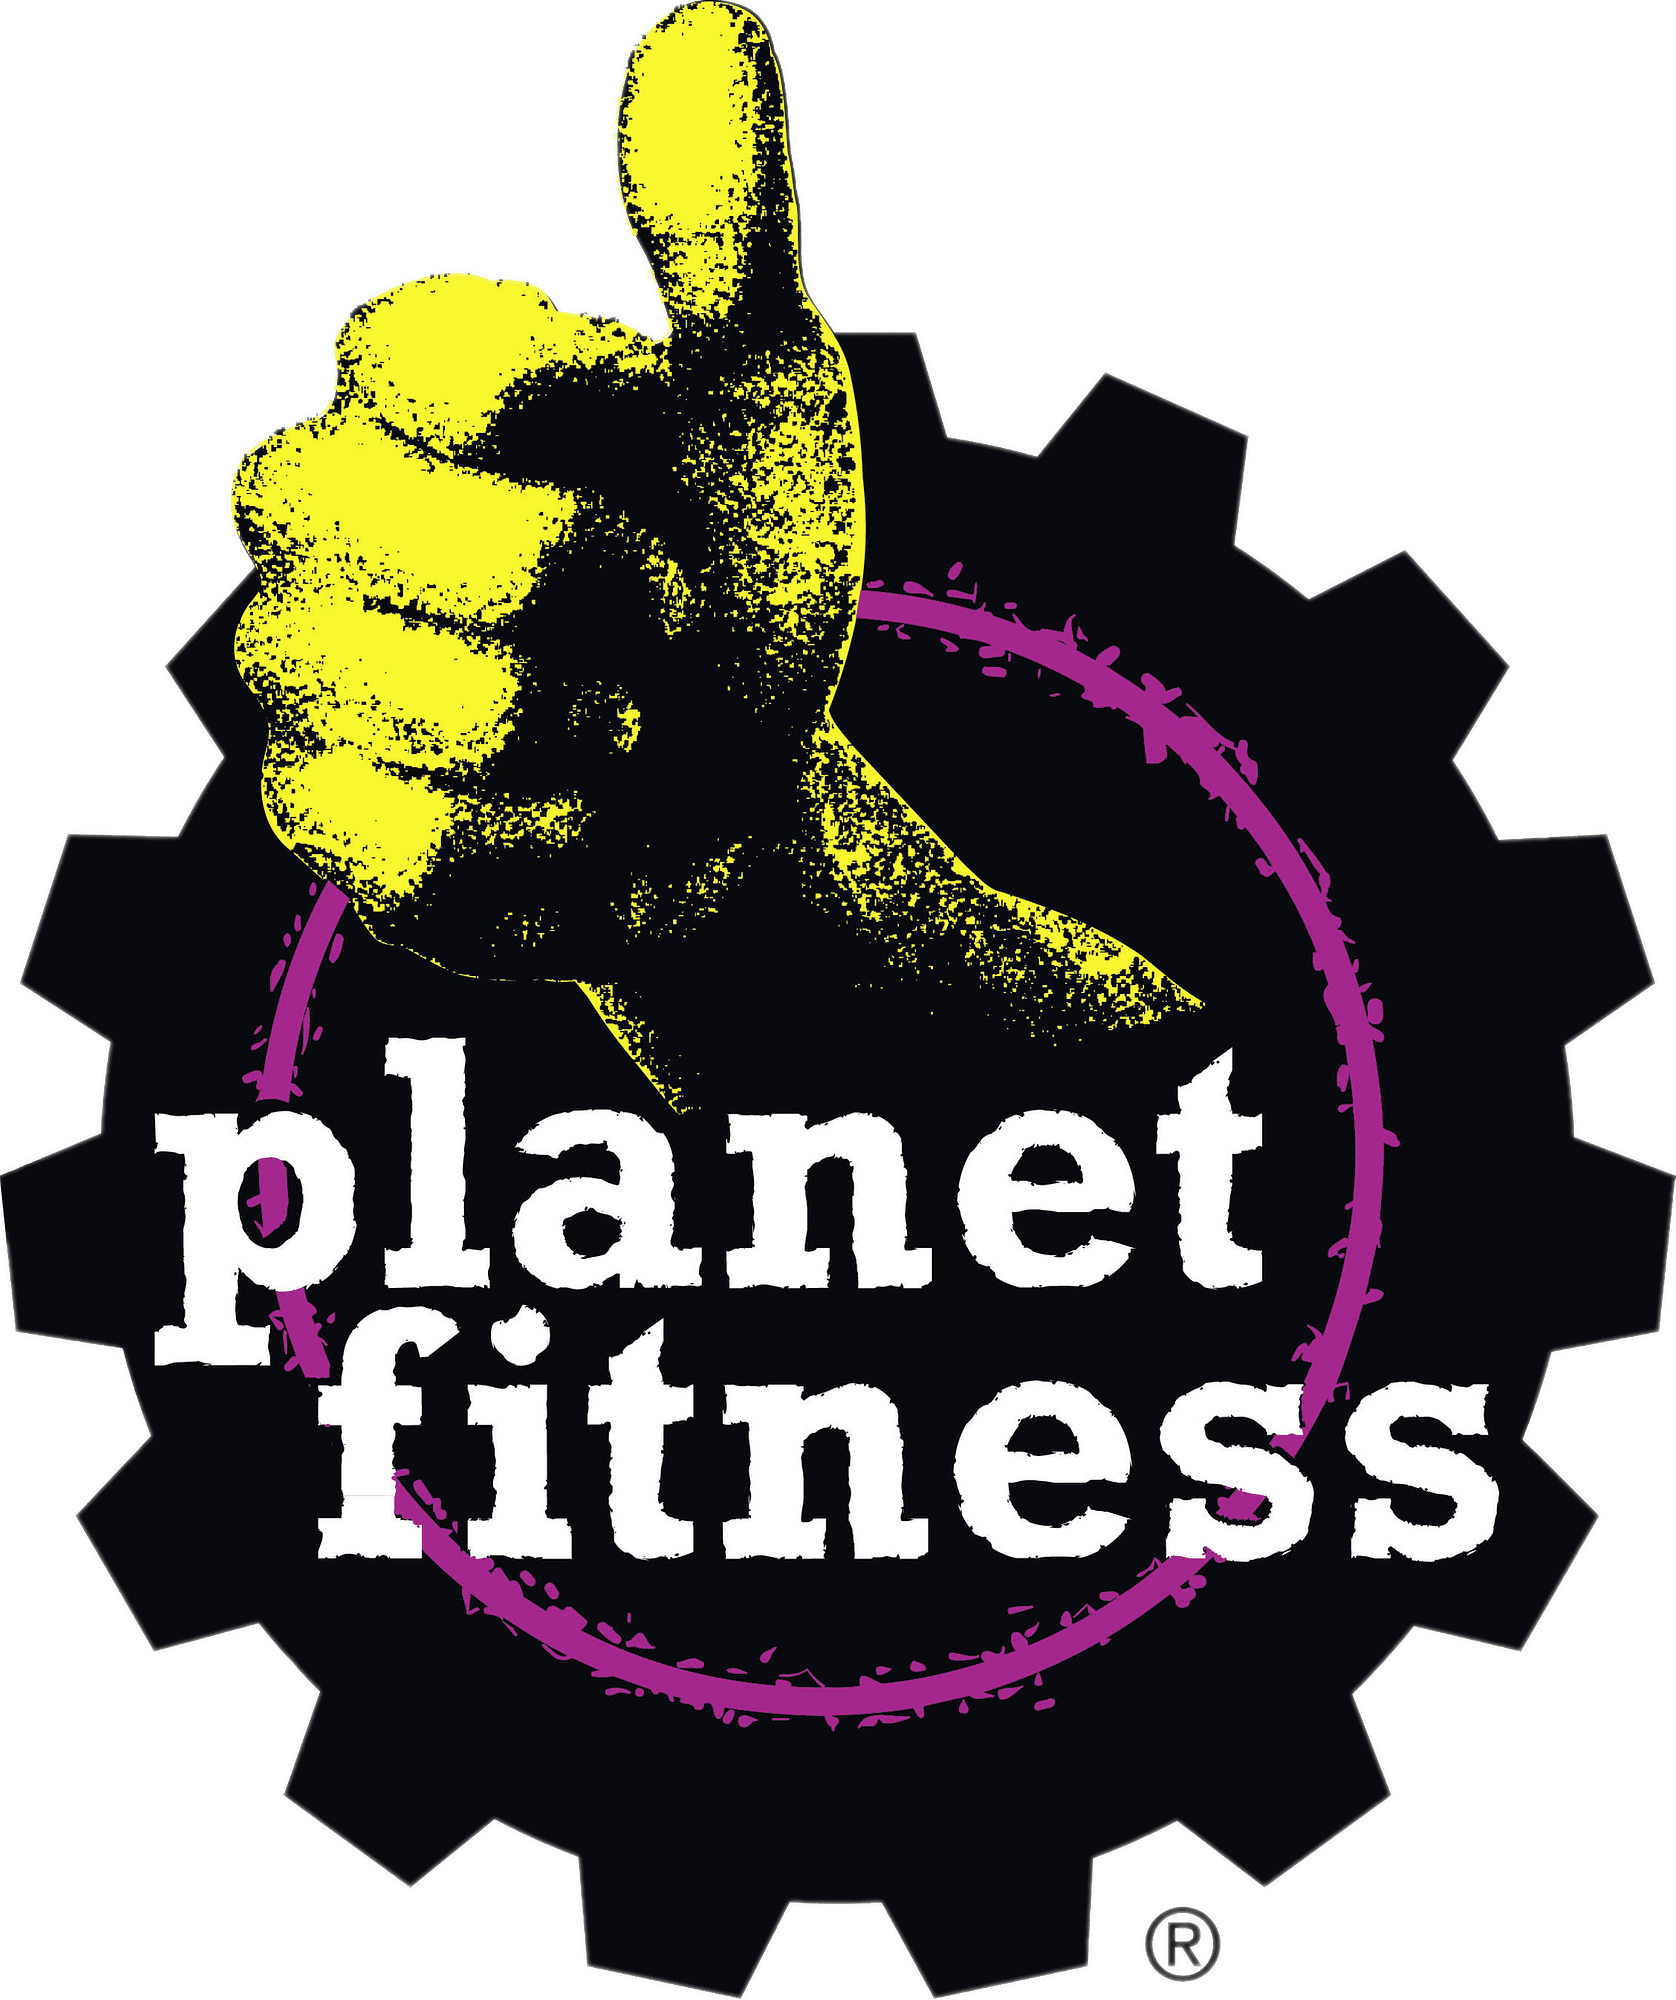 planet-fitness-logo